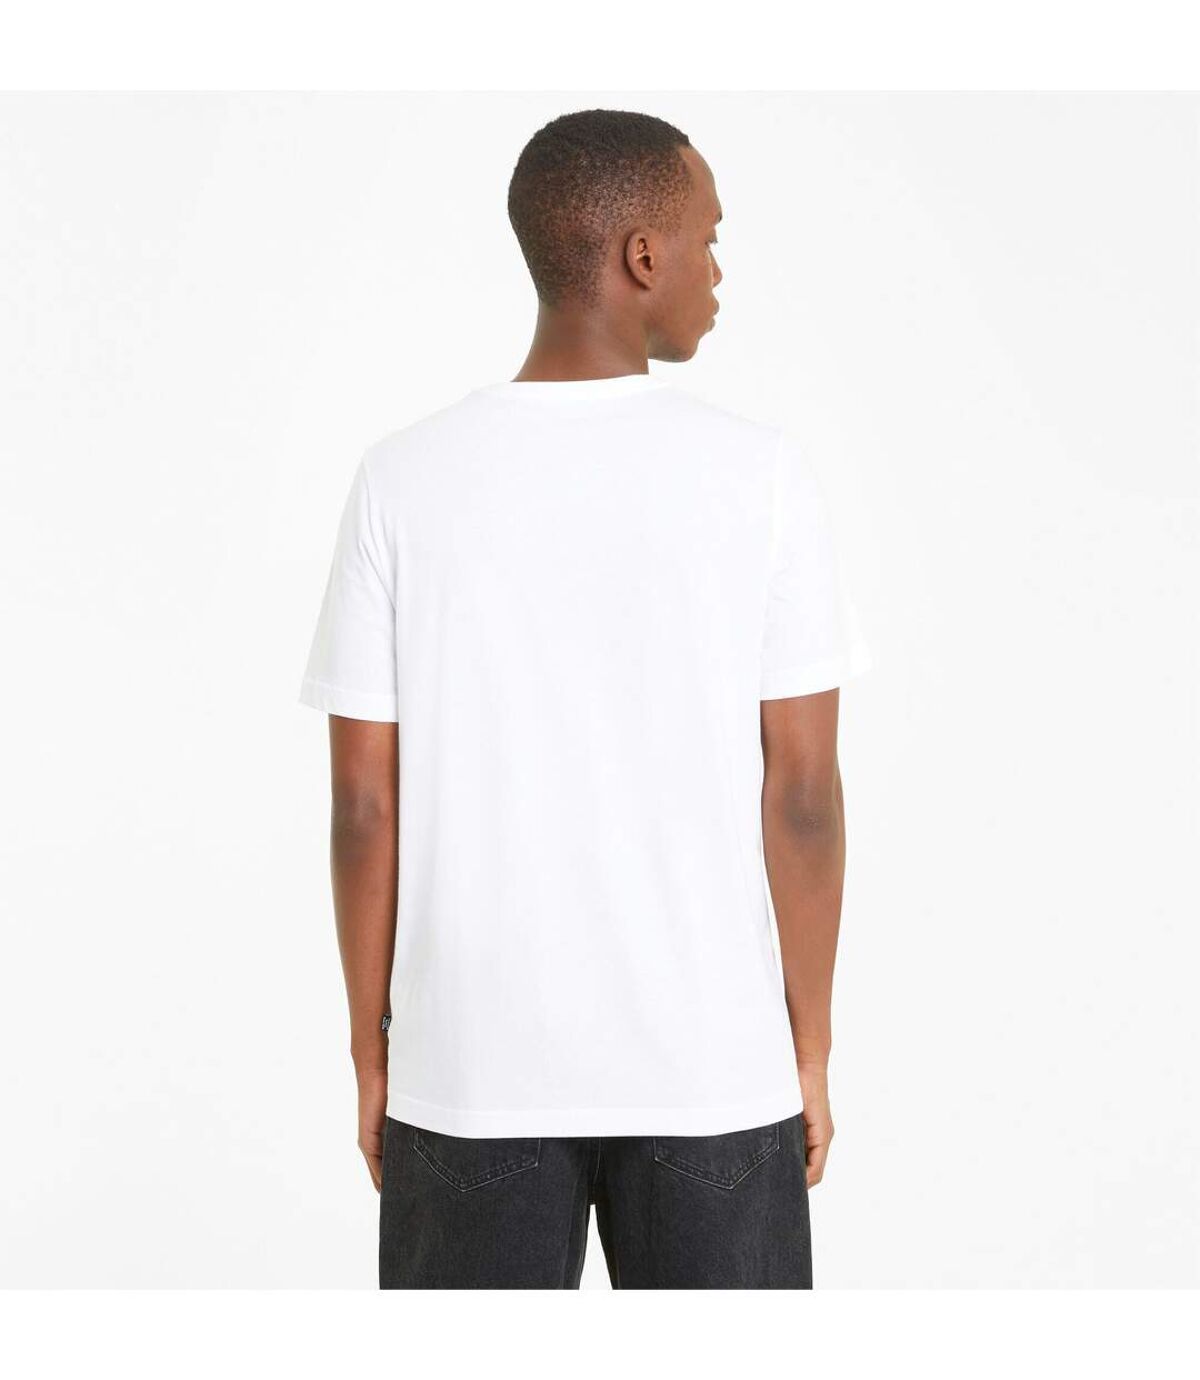 Puma - T-shirt ESS - Homme (Blanc) - UTRD1918